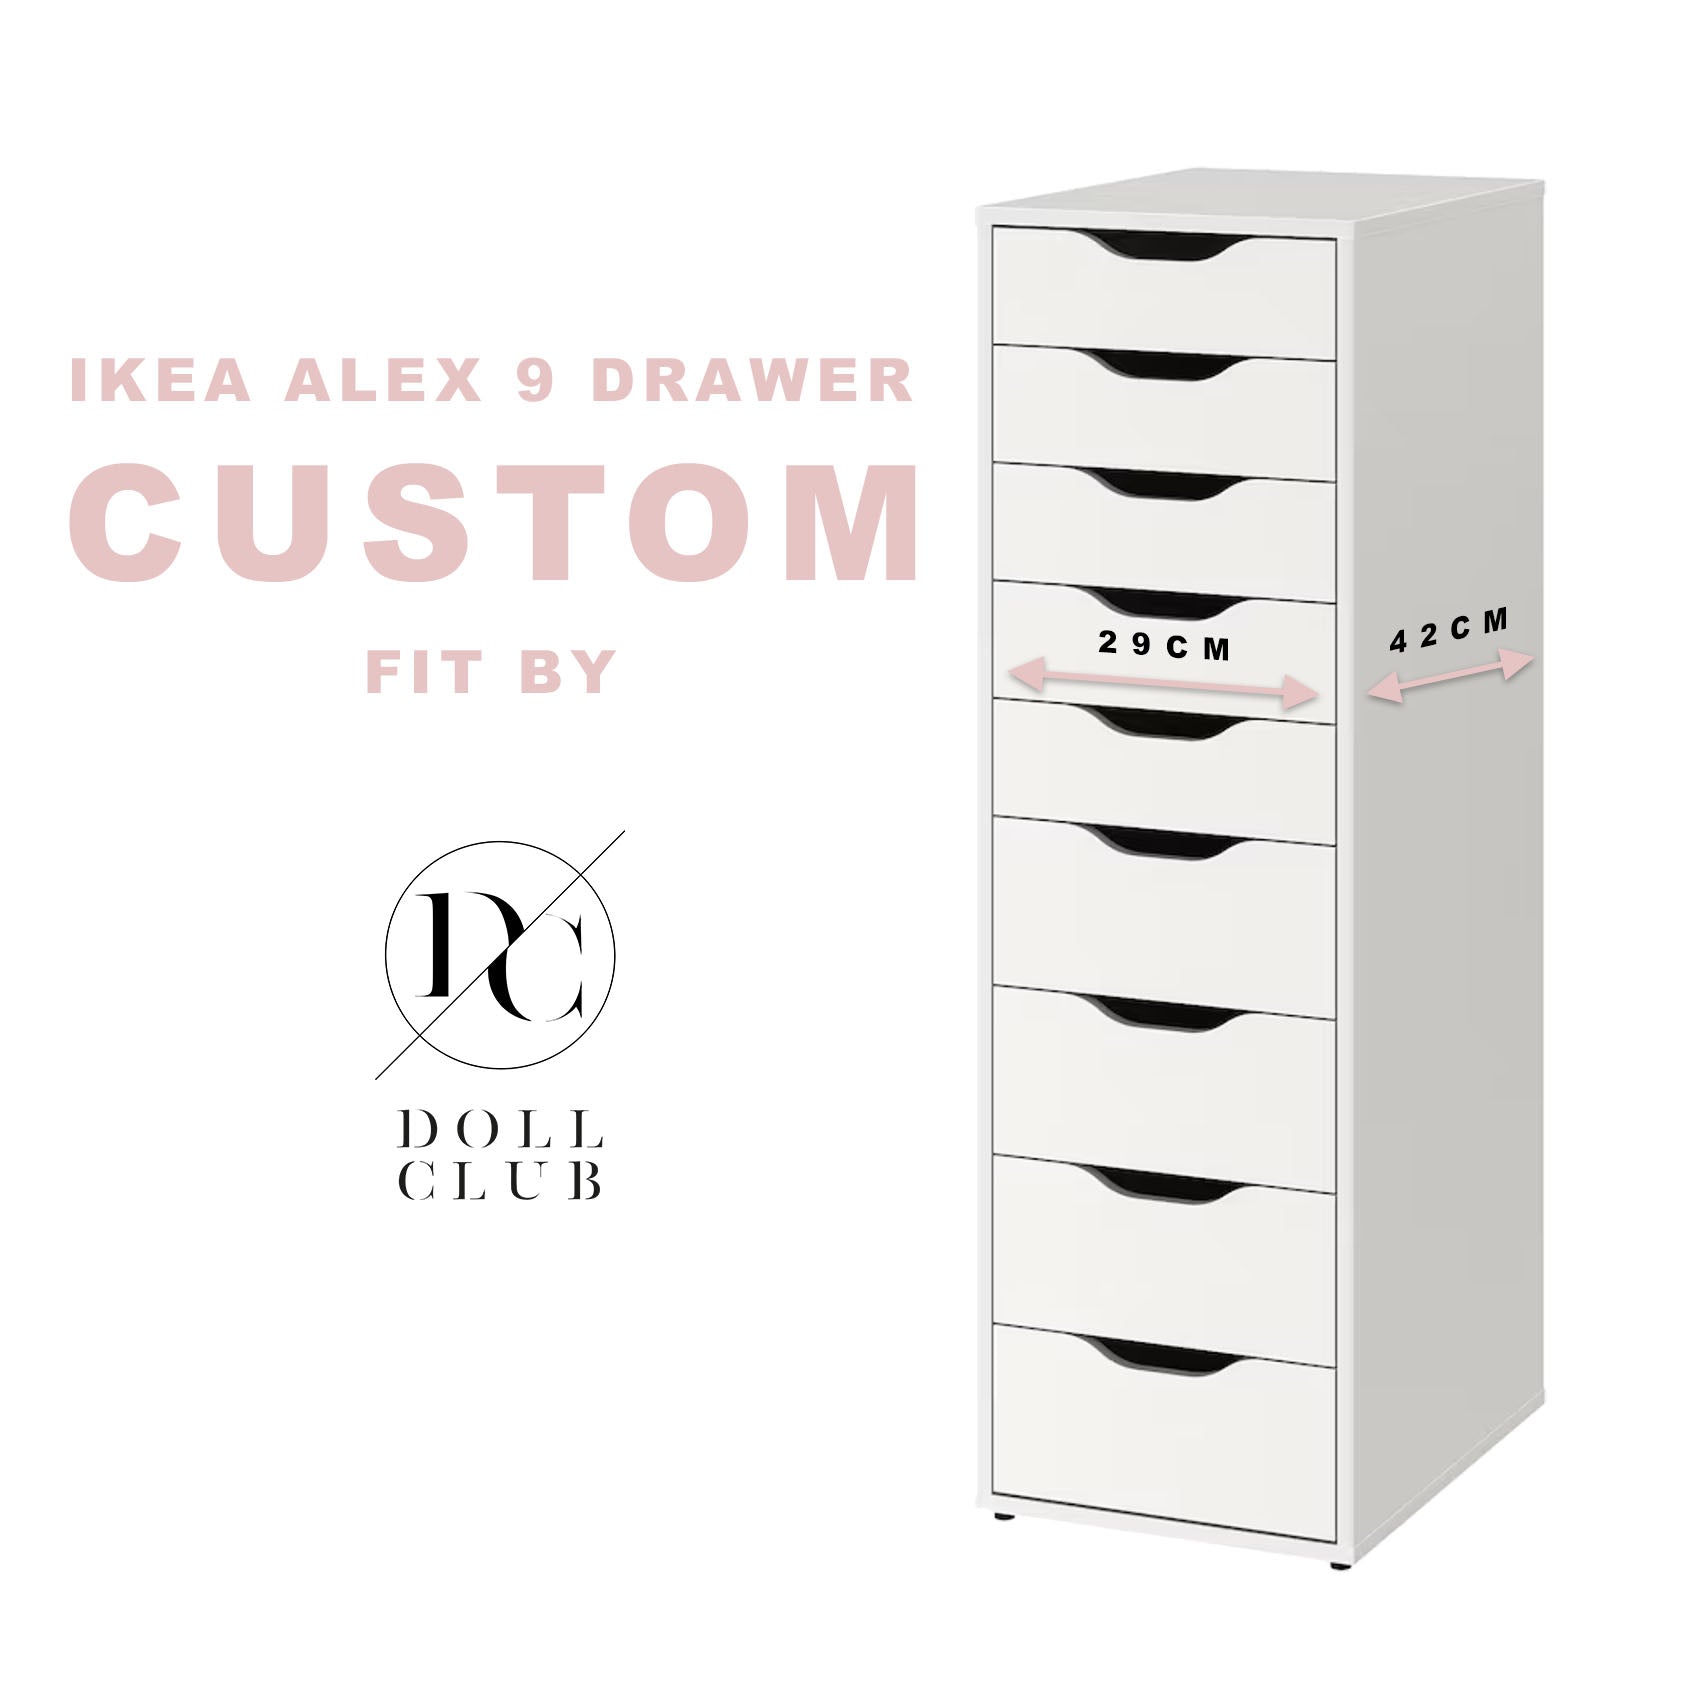 BUNDLE: 3 x IKEA ALEX 9 DRAWER DIVIDERS. Clear Acrylic Storage For You –  doll club uk